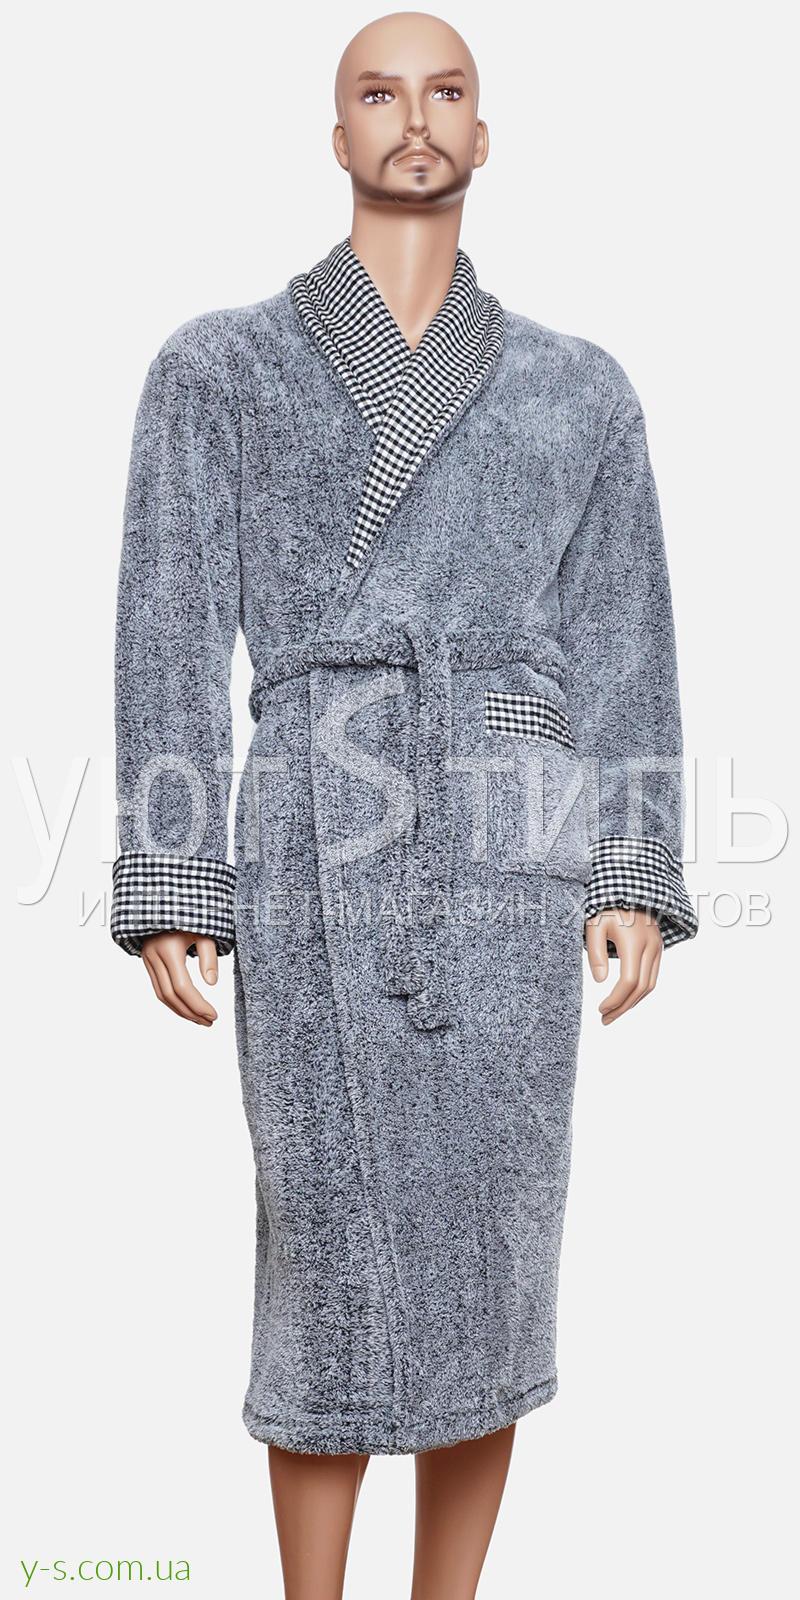 Мужской пушистый халат CN1525 серый цвет